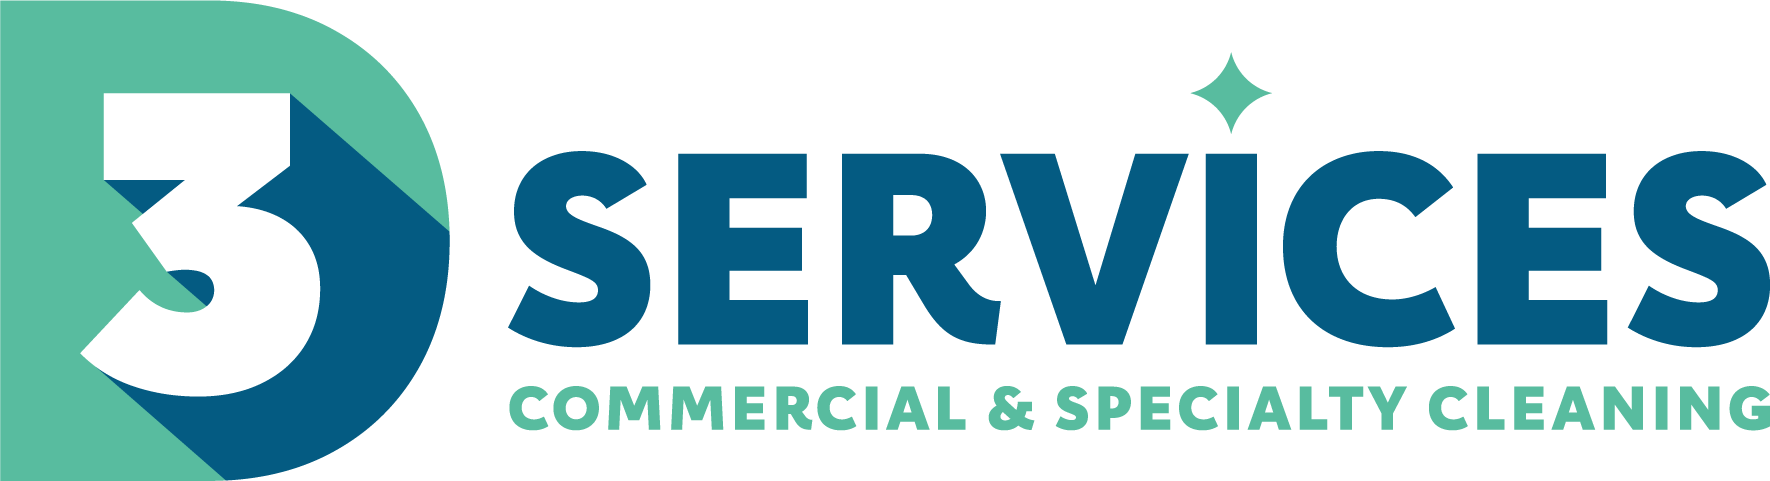 3D Property Services Logo